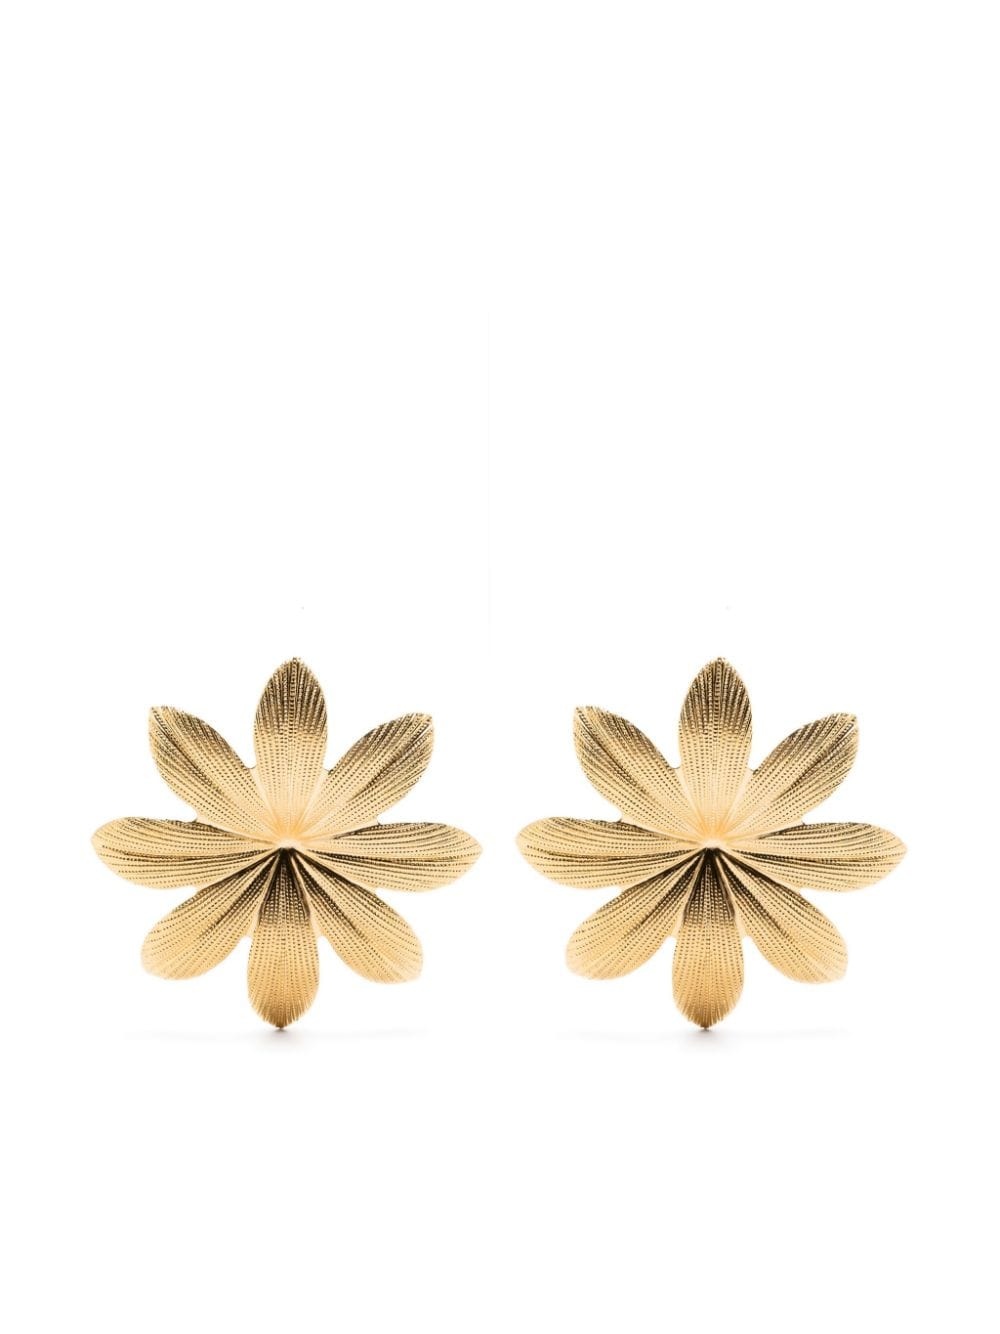 Sonia Liliun earrings - 1